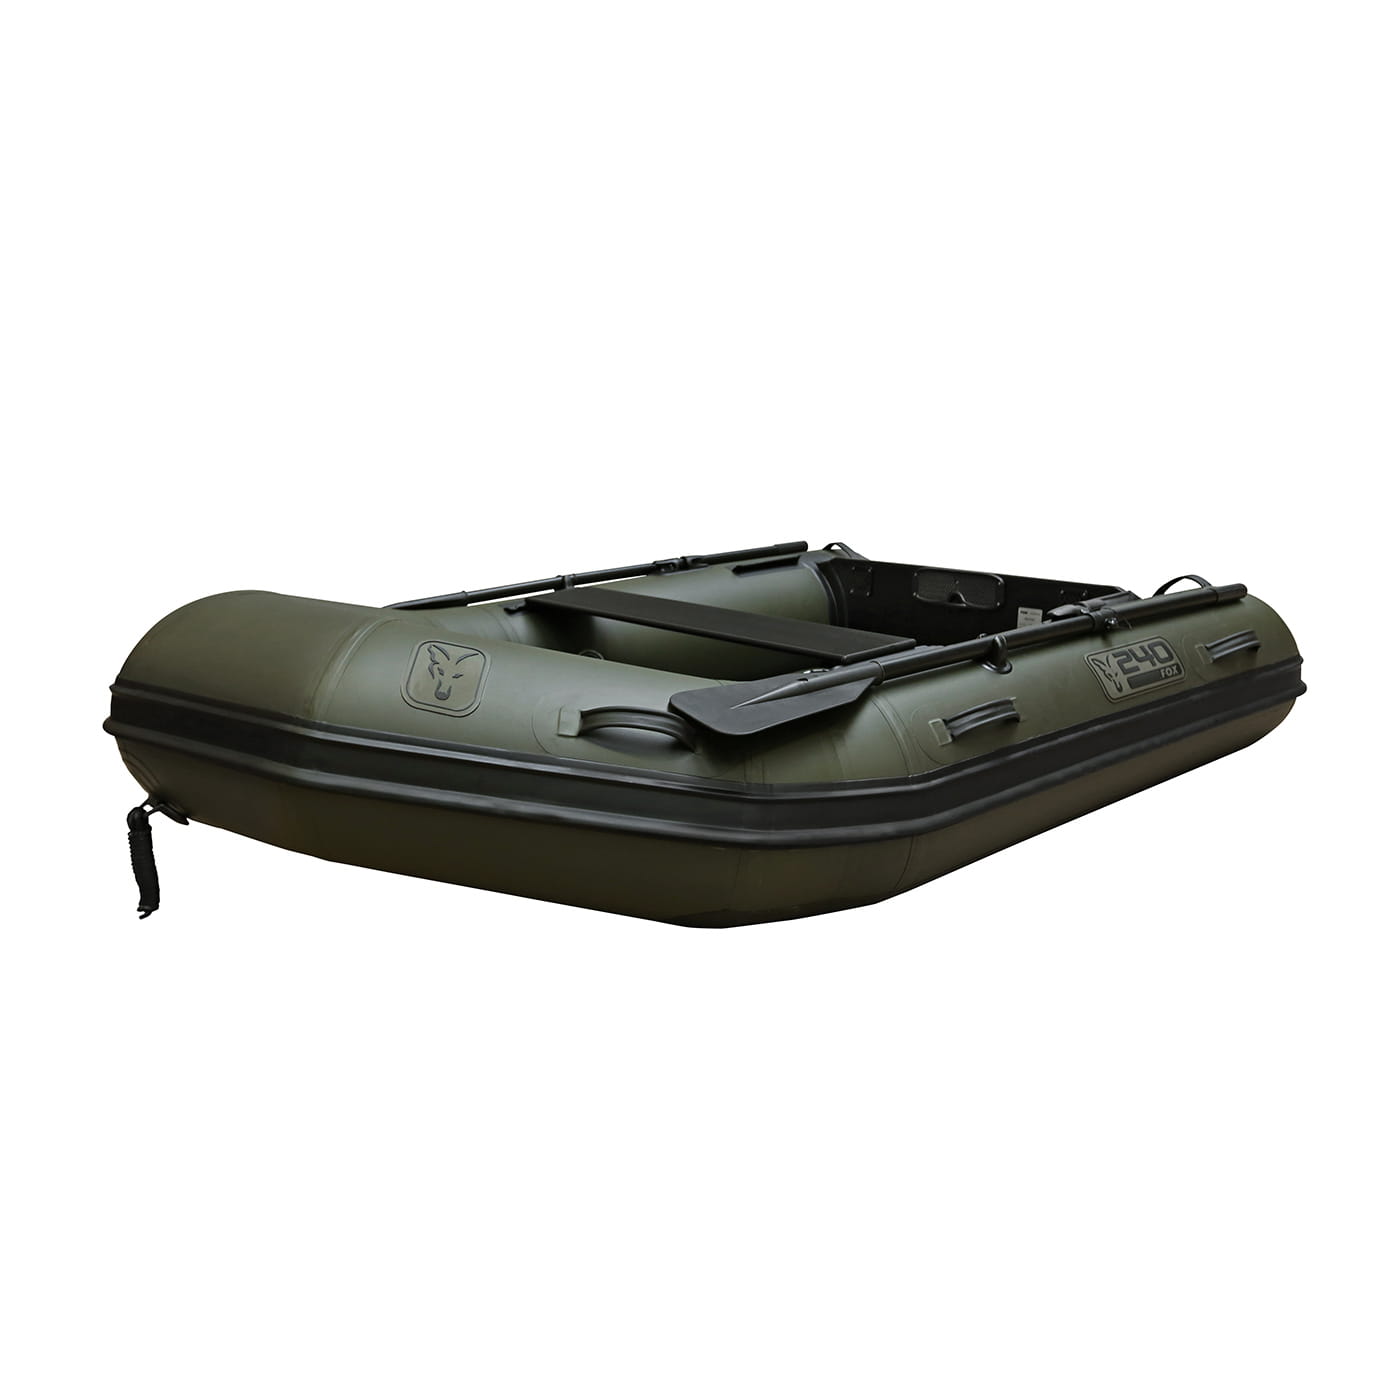 cib023_green-inflatable-boat-240